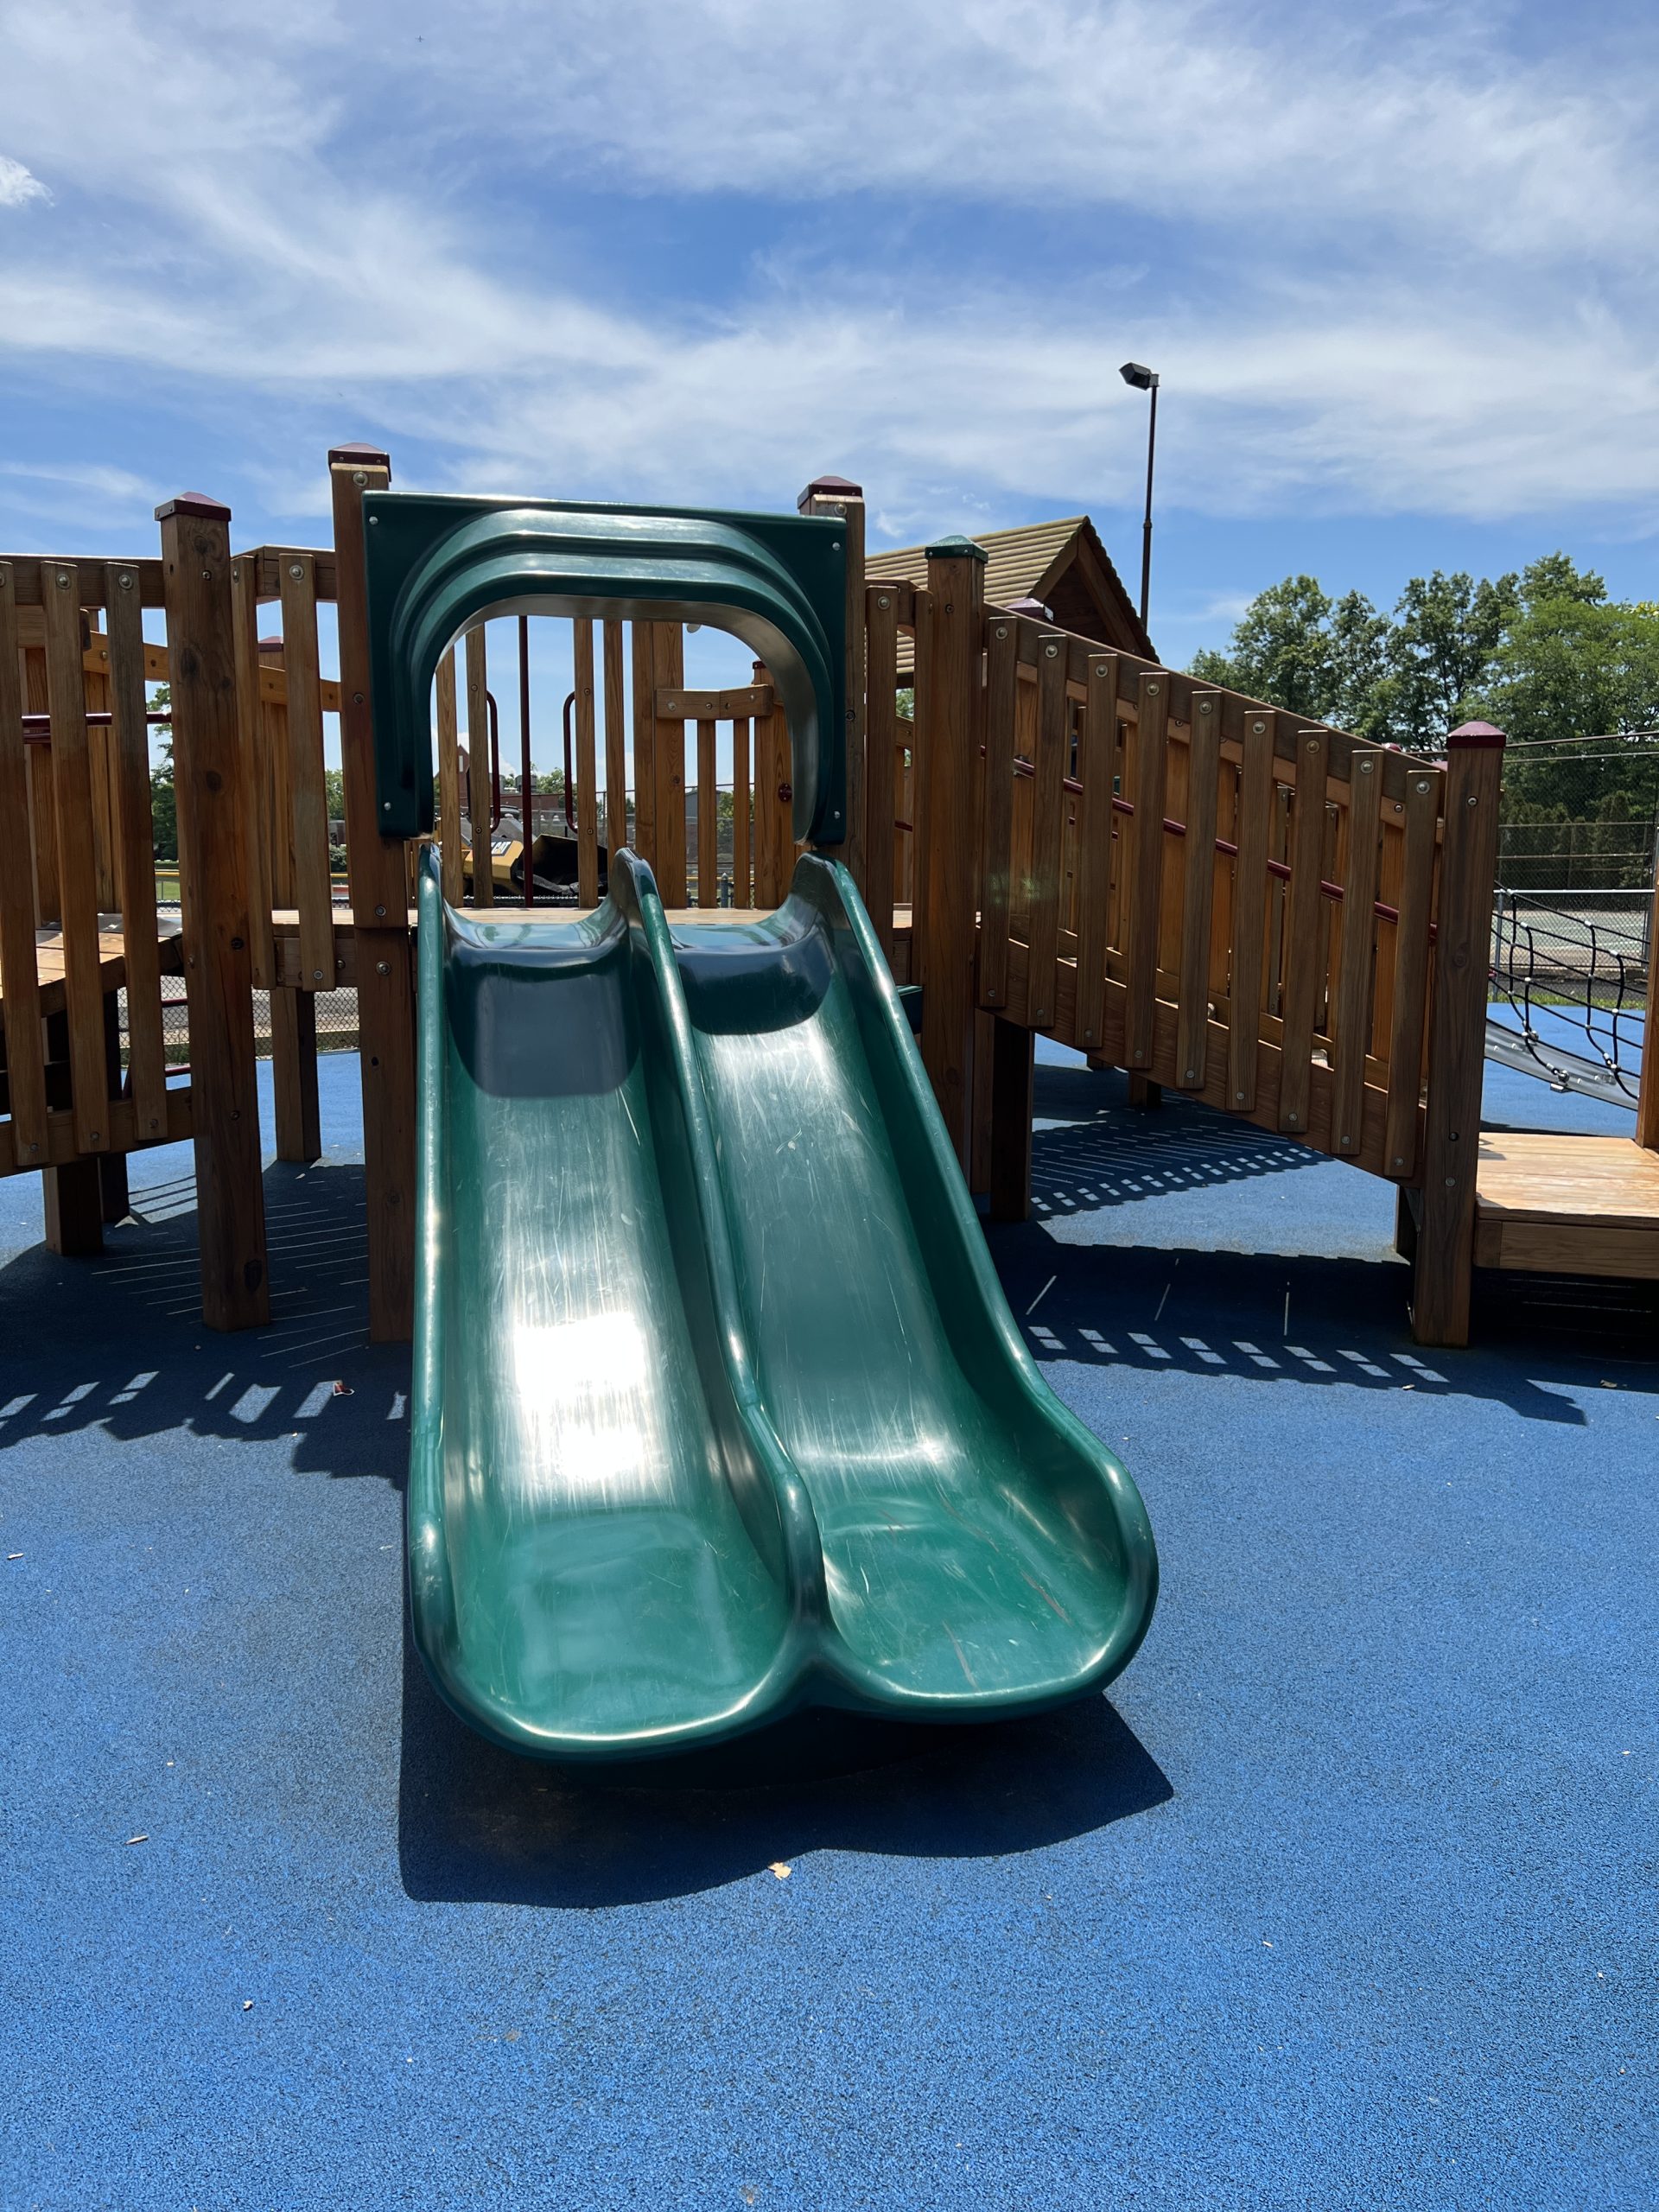 Gardner Field Playground in Denville NJ side by side slide